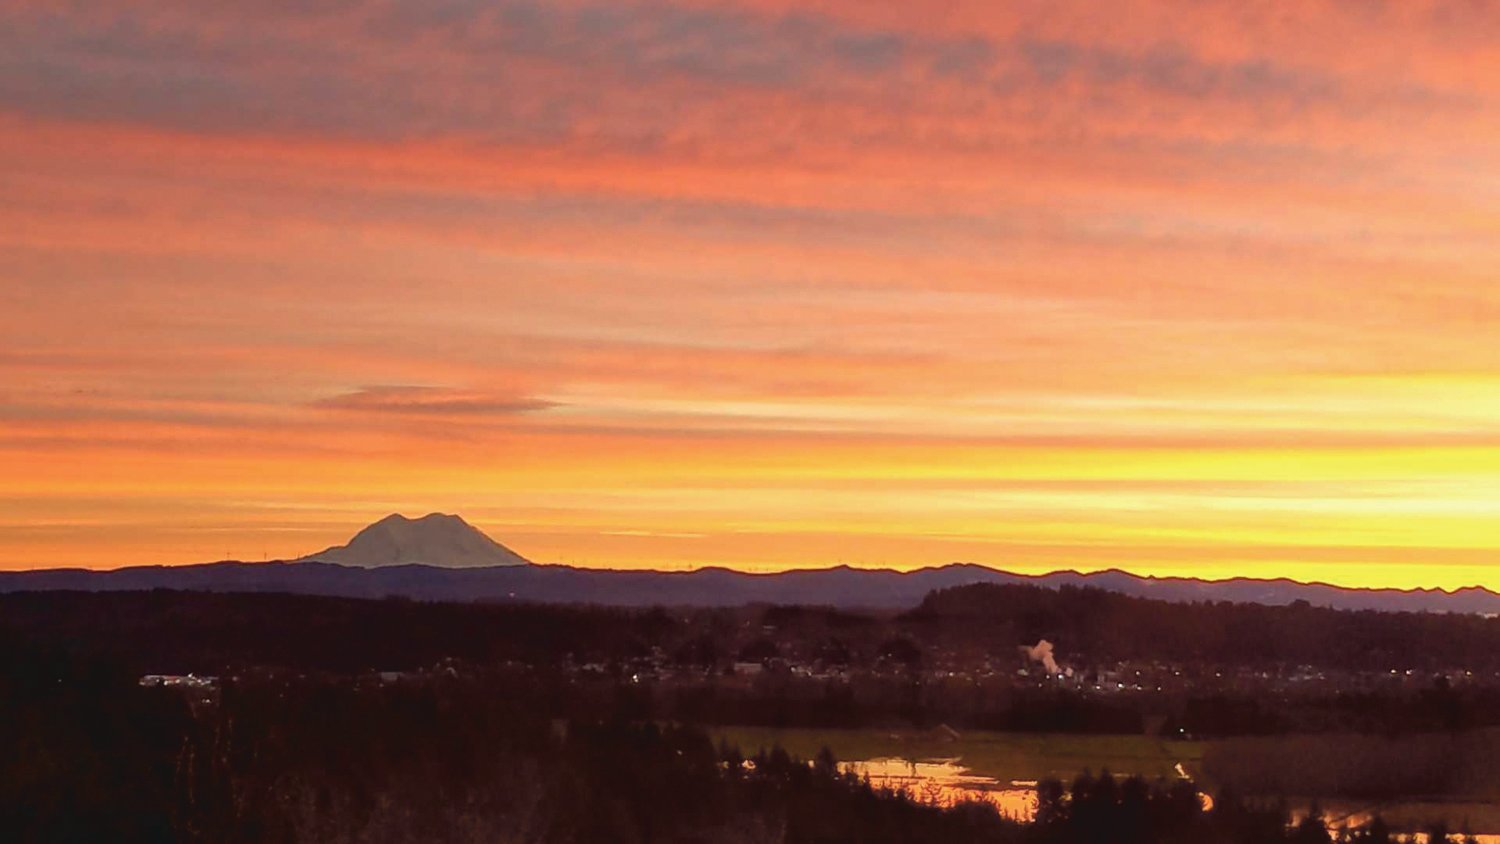 The sun rises over Chehalis Friday morning as Mount Rainier rises above the horizon.